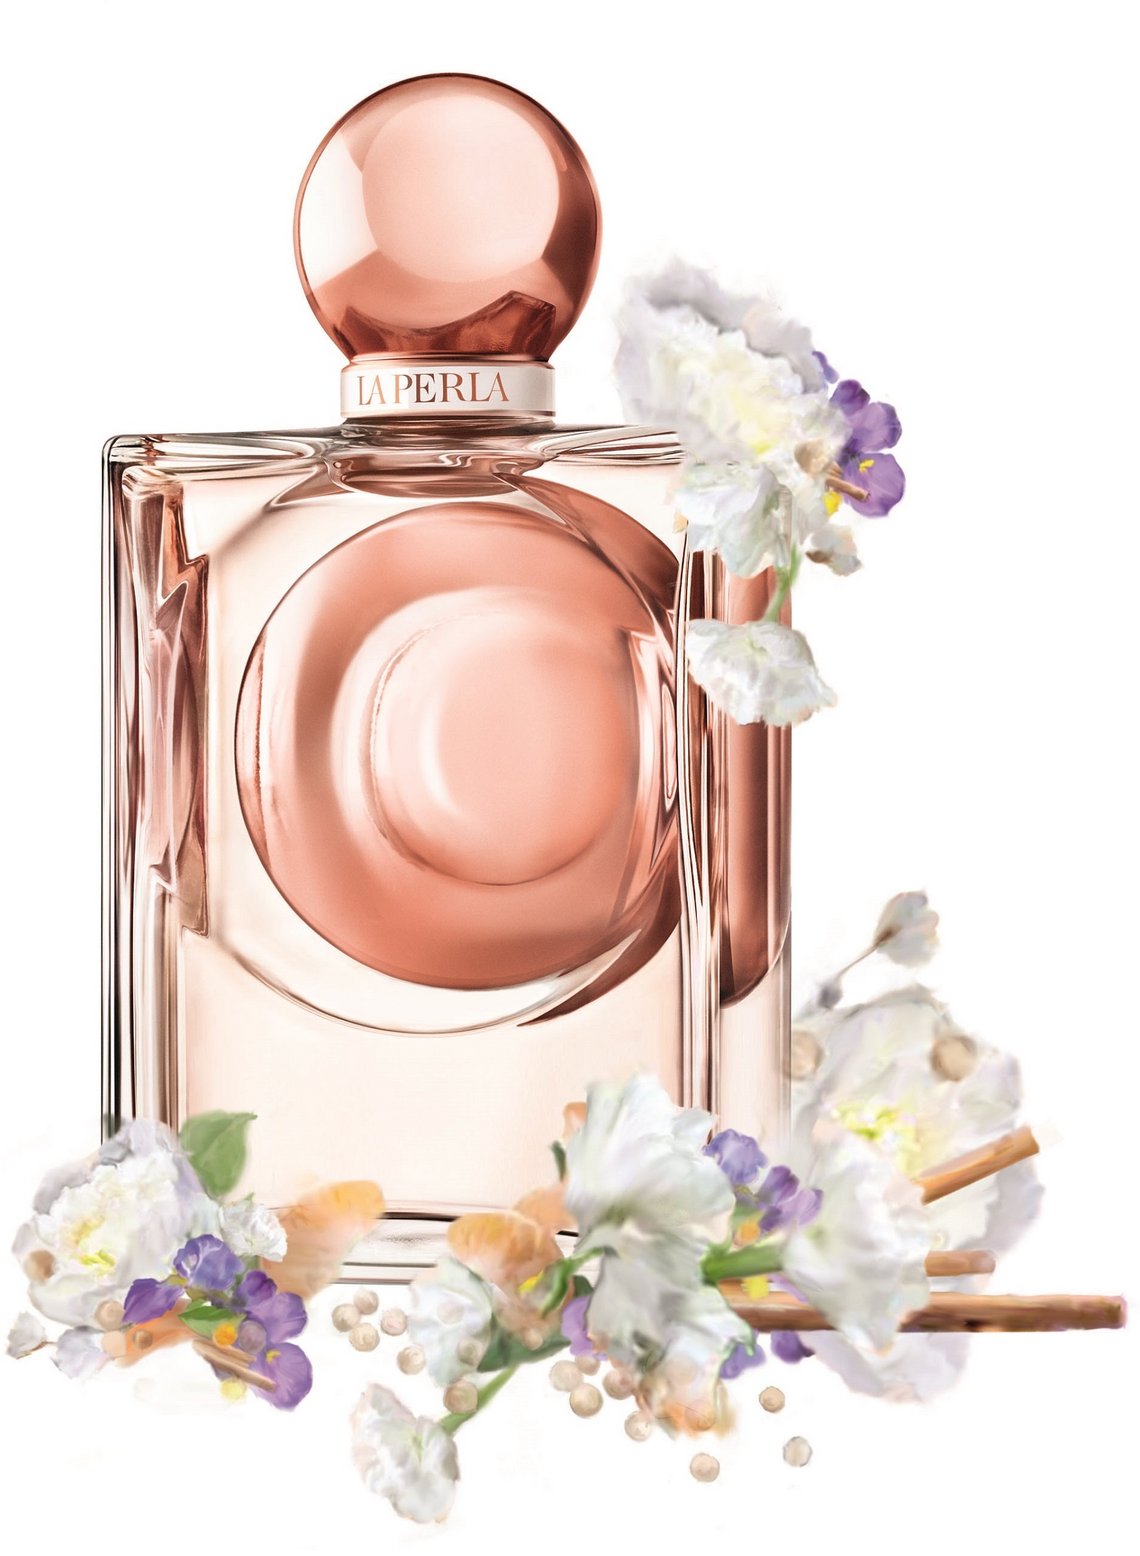 La Perla Parfumflacon mit Blumen dekoriert